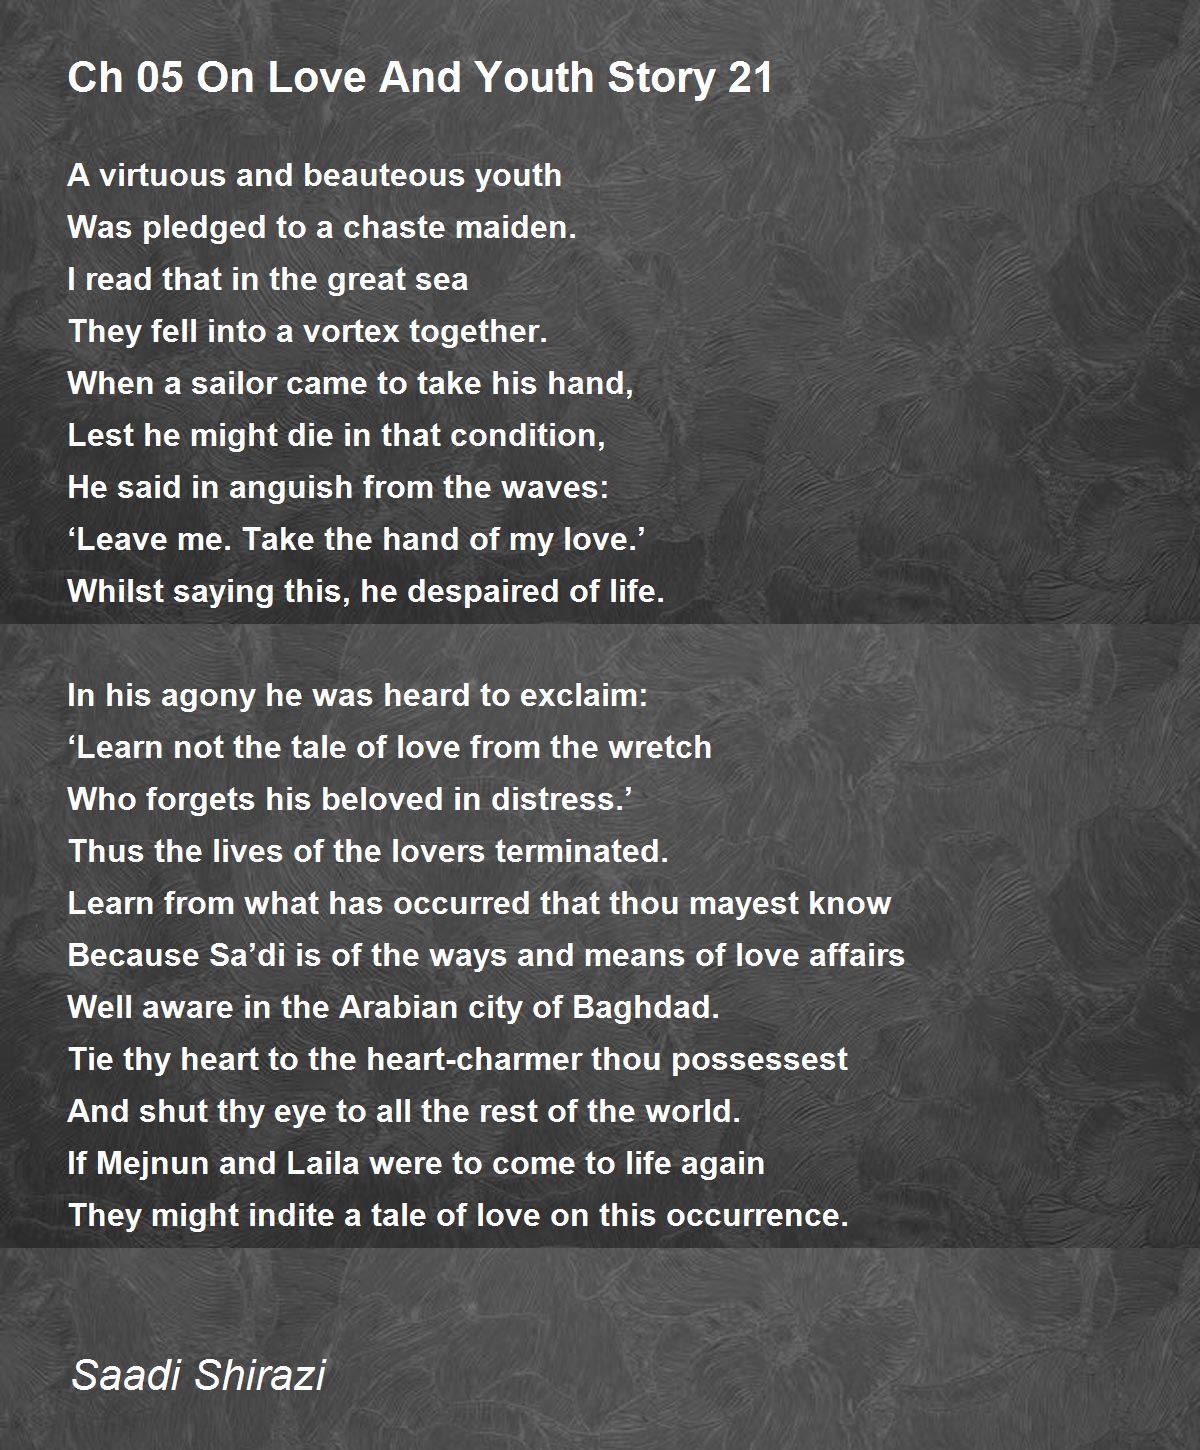 Ch 05 On Love And Youth Story 21 Poem by Saadi Shirazi - Poem Hunter